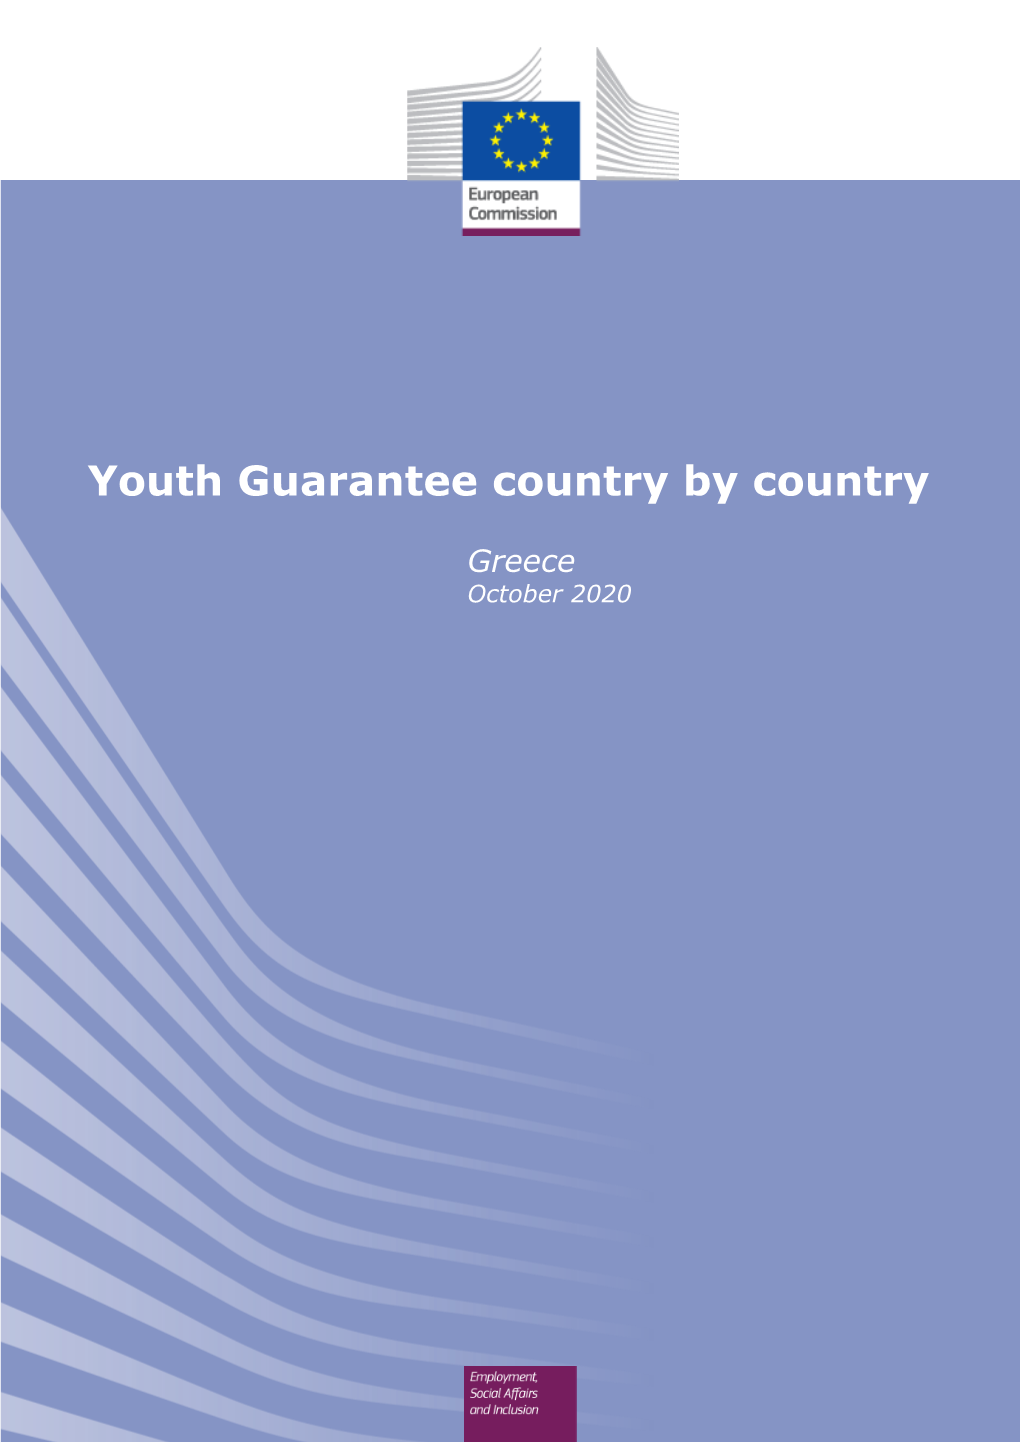 The Youth Guarantee in Greece